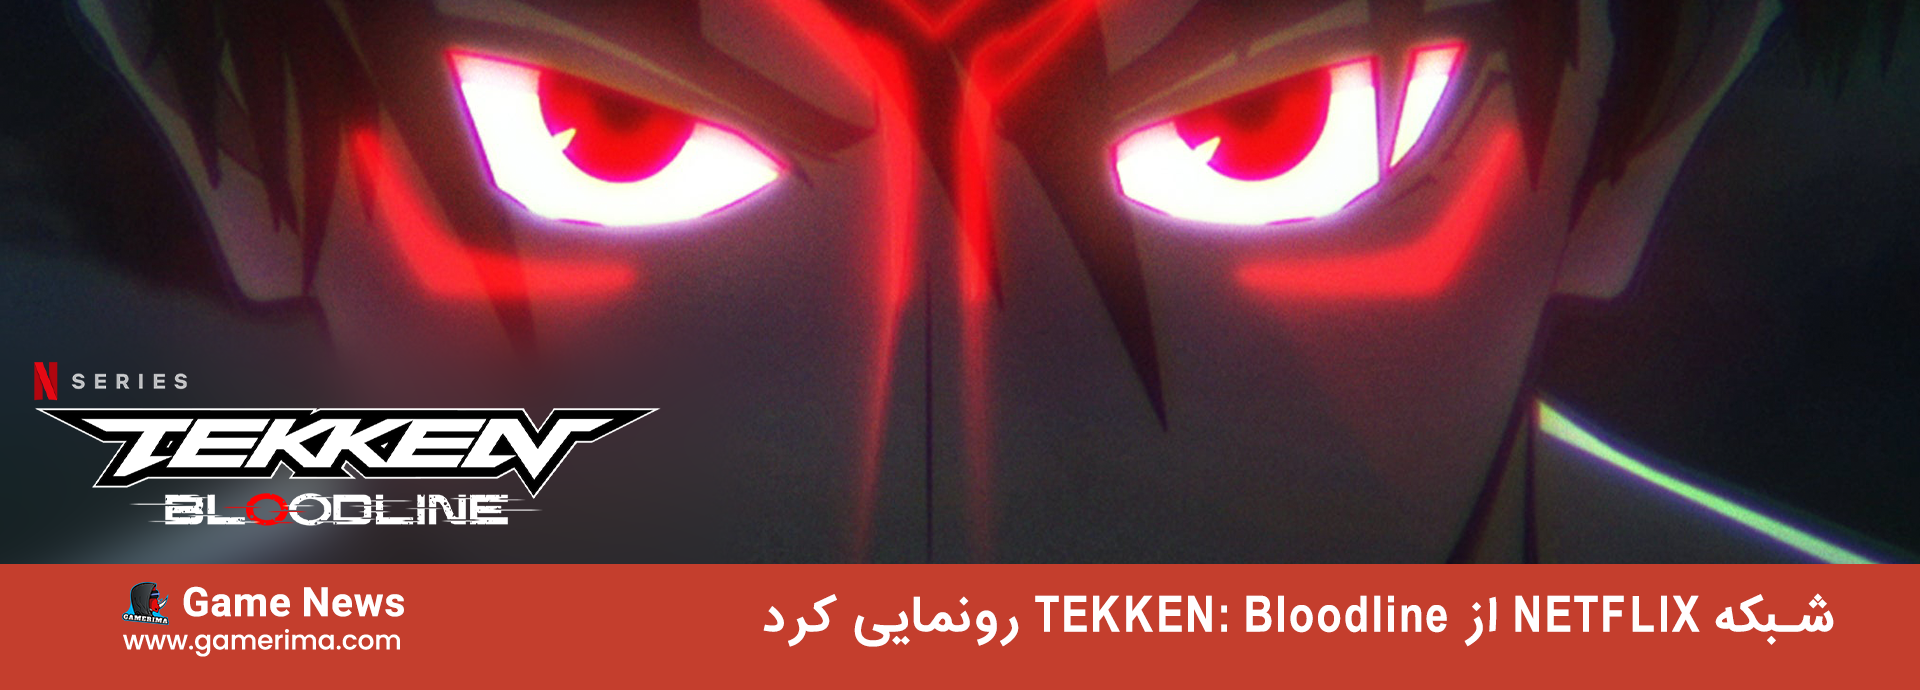 شبکه Netflix از انیمه Tekken: bloodline رونمایی کرد